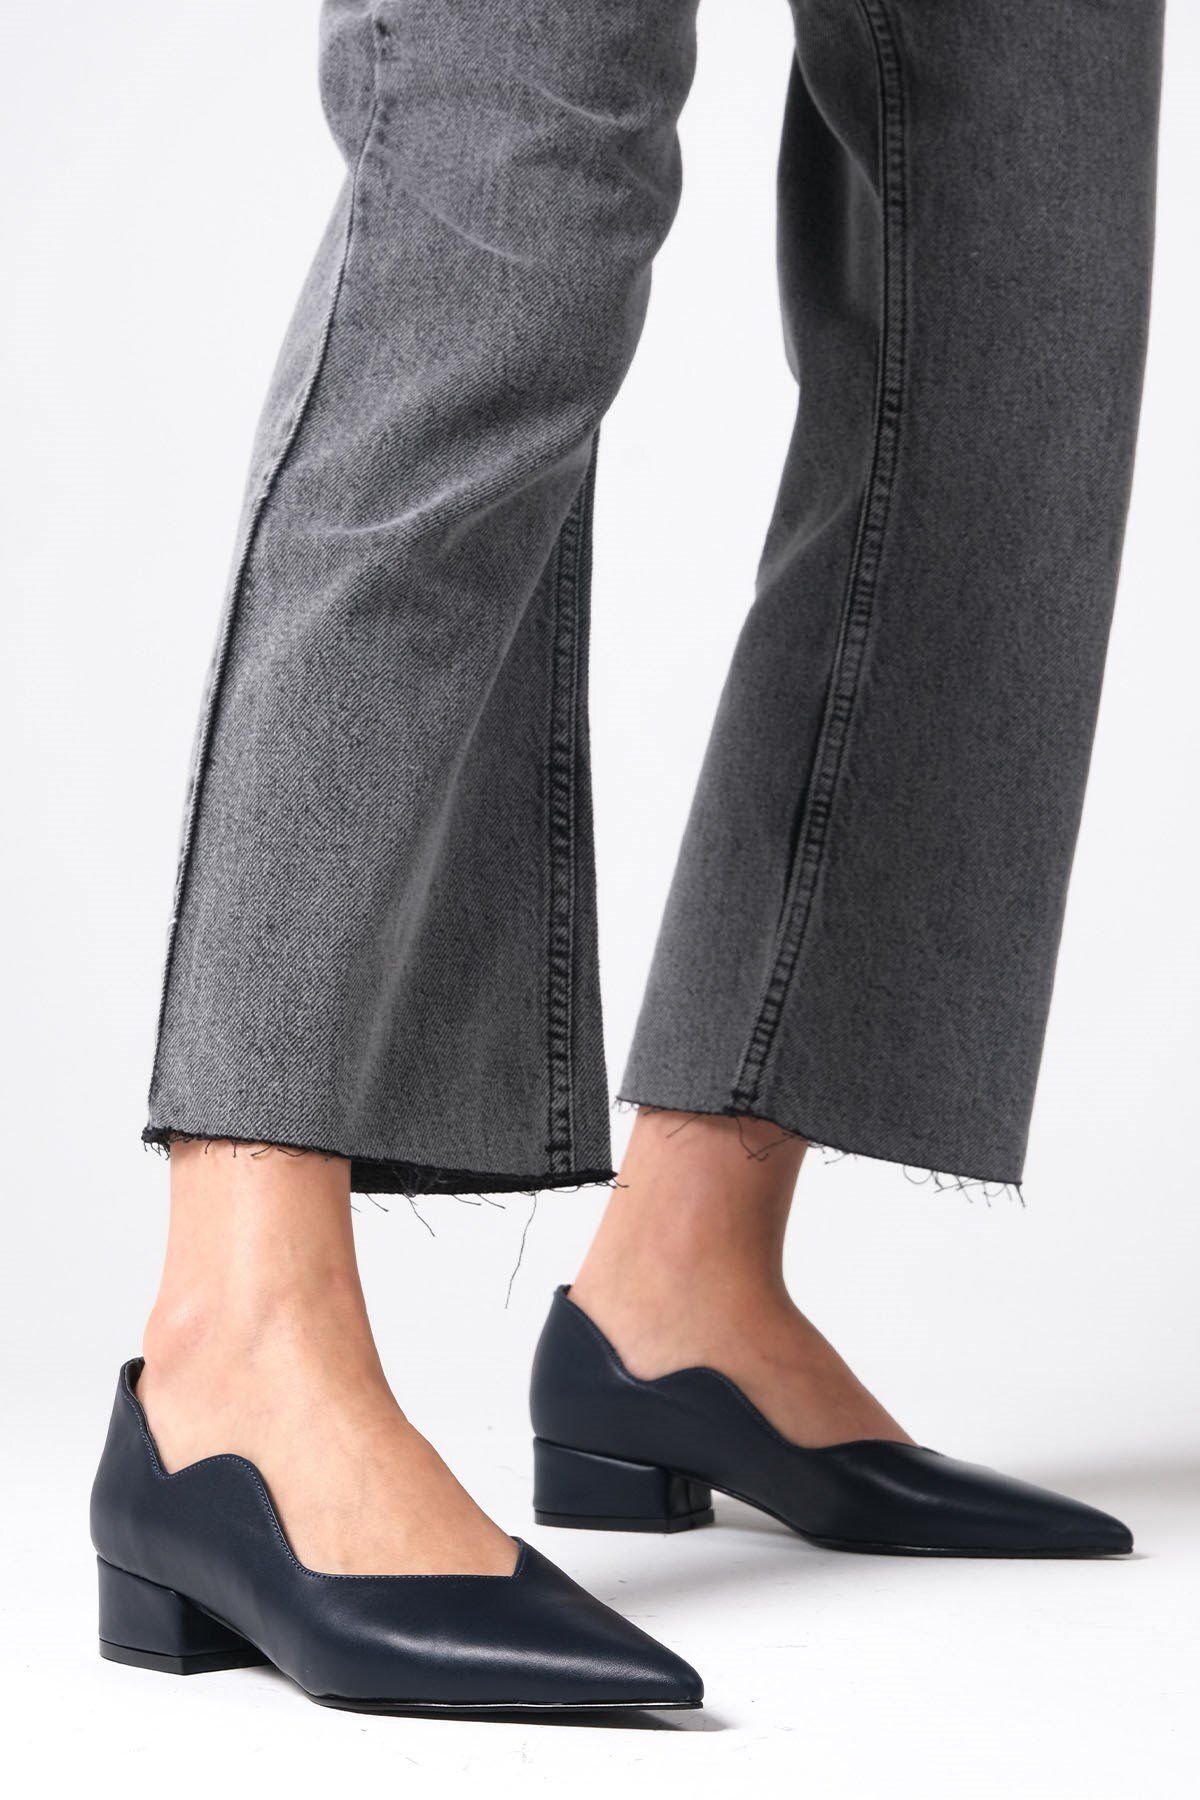 Mio Gusto Gloria Hakiki Deri Lacivert Renk Kadın Kısa Topuklu Ayakkabı